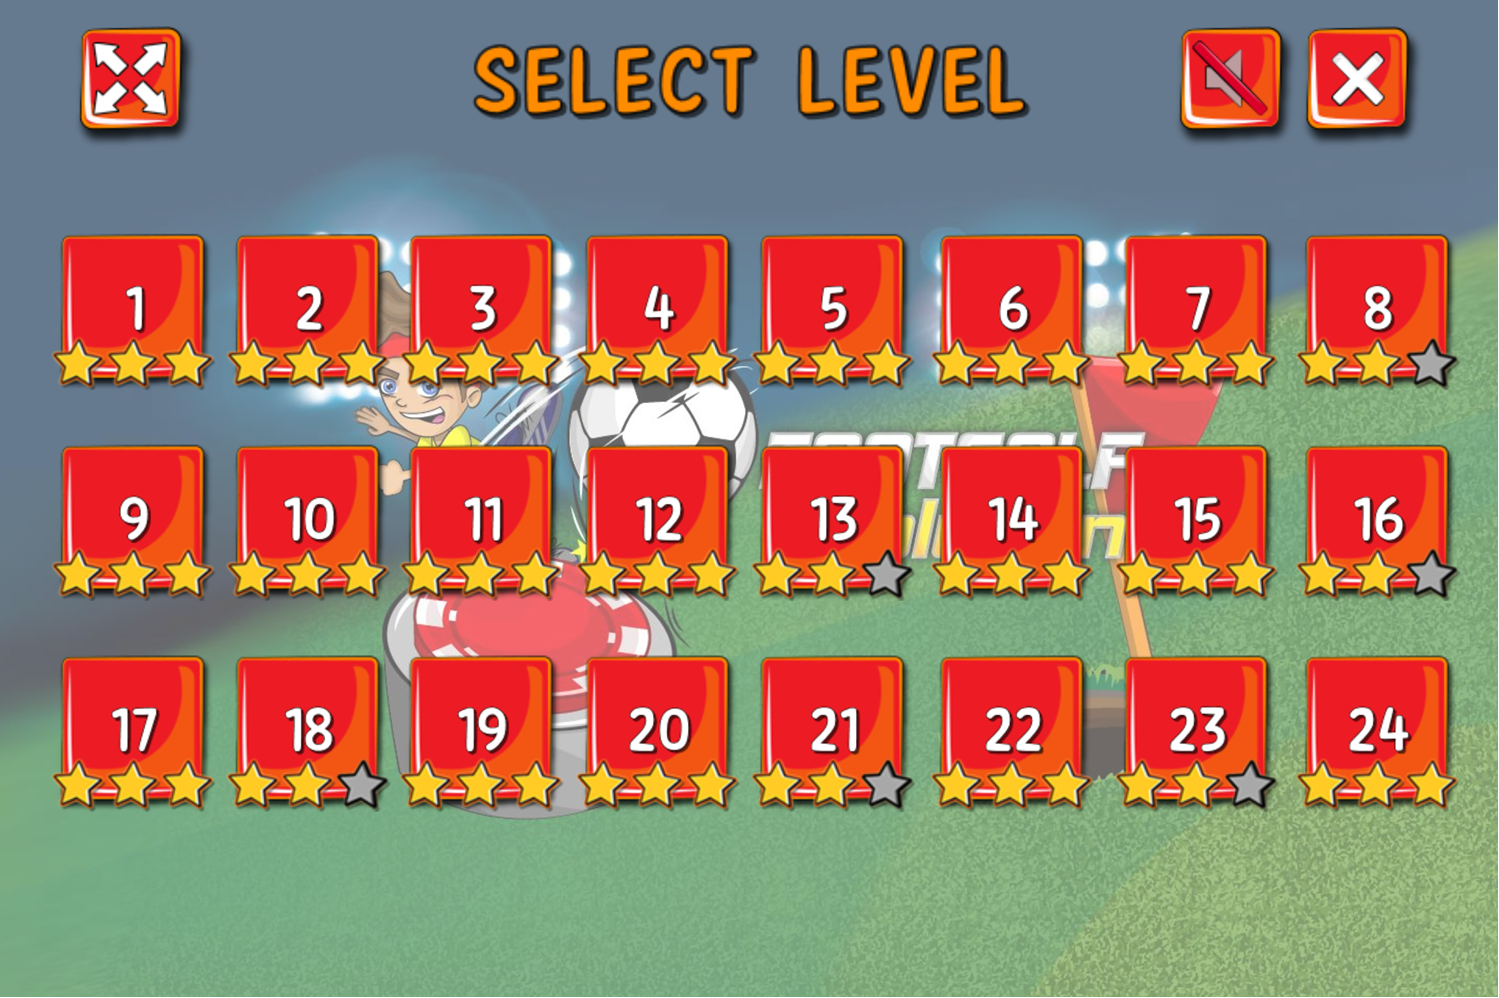 Footgolf Evolution Game Level Select Screenshot.